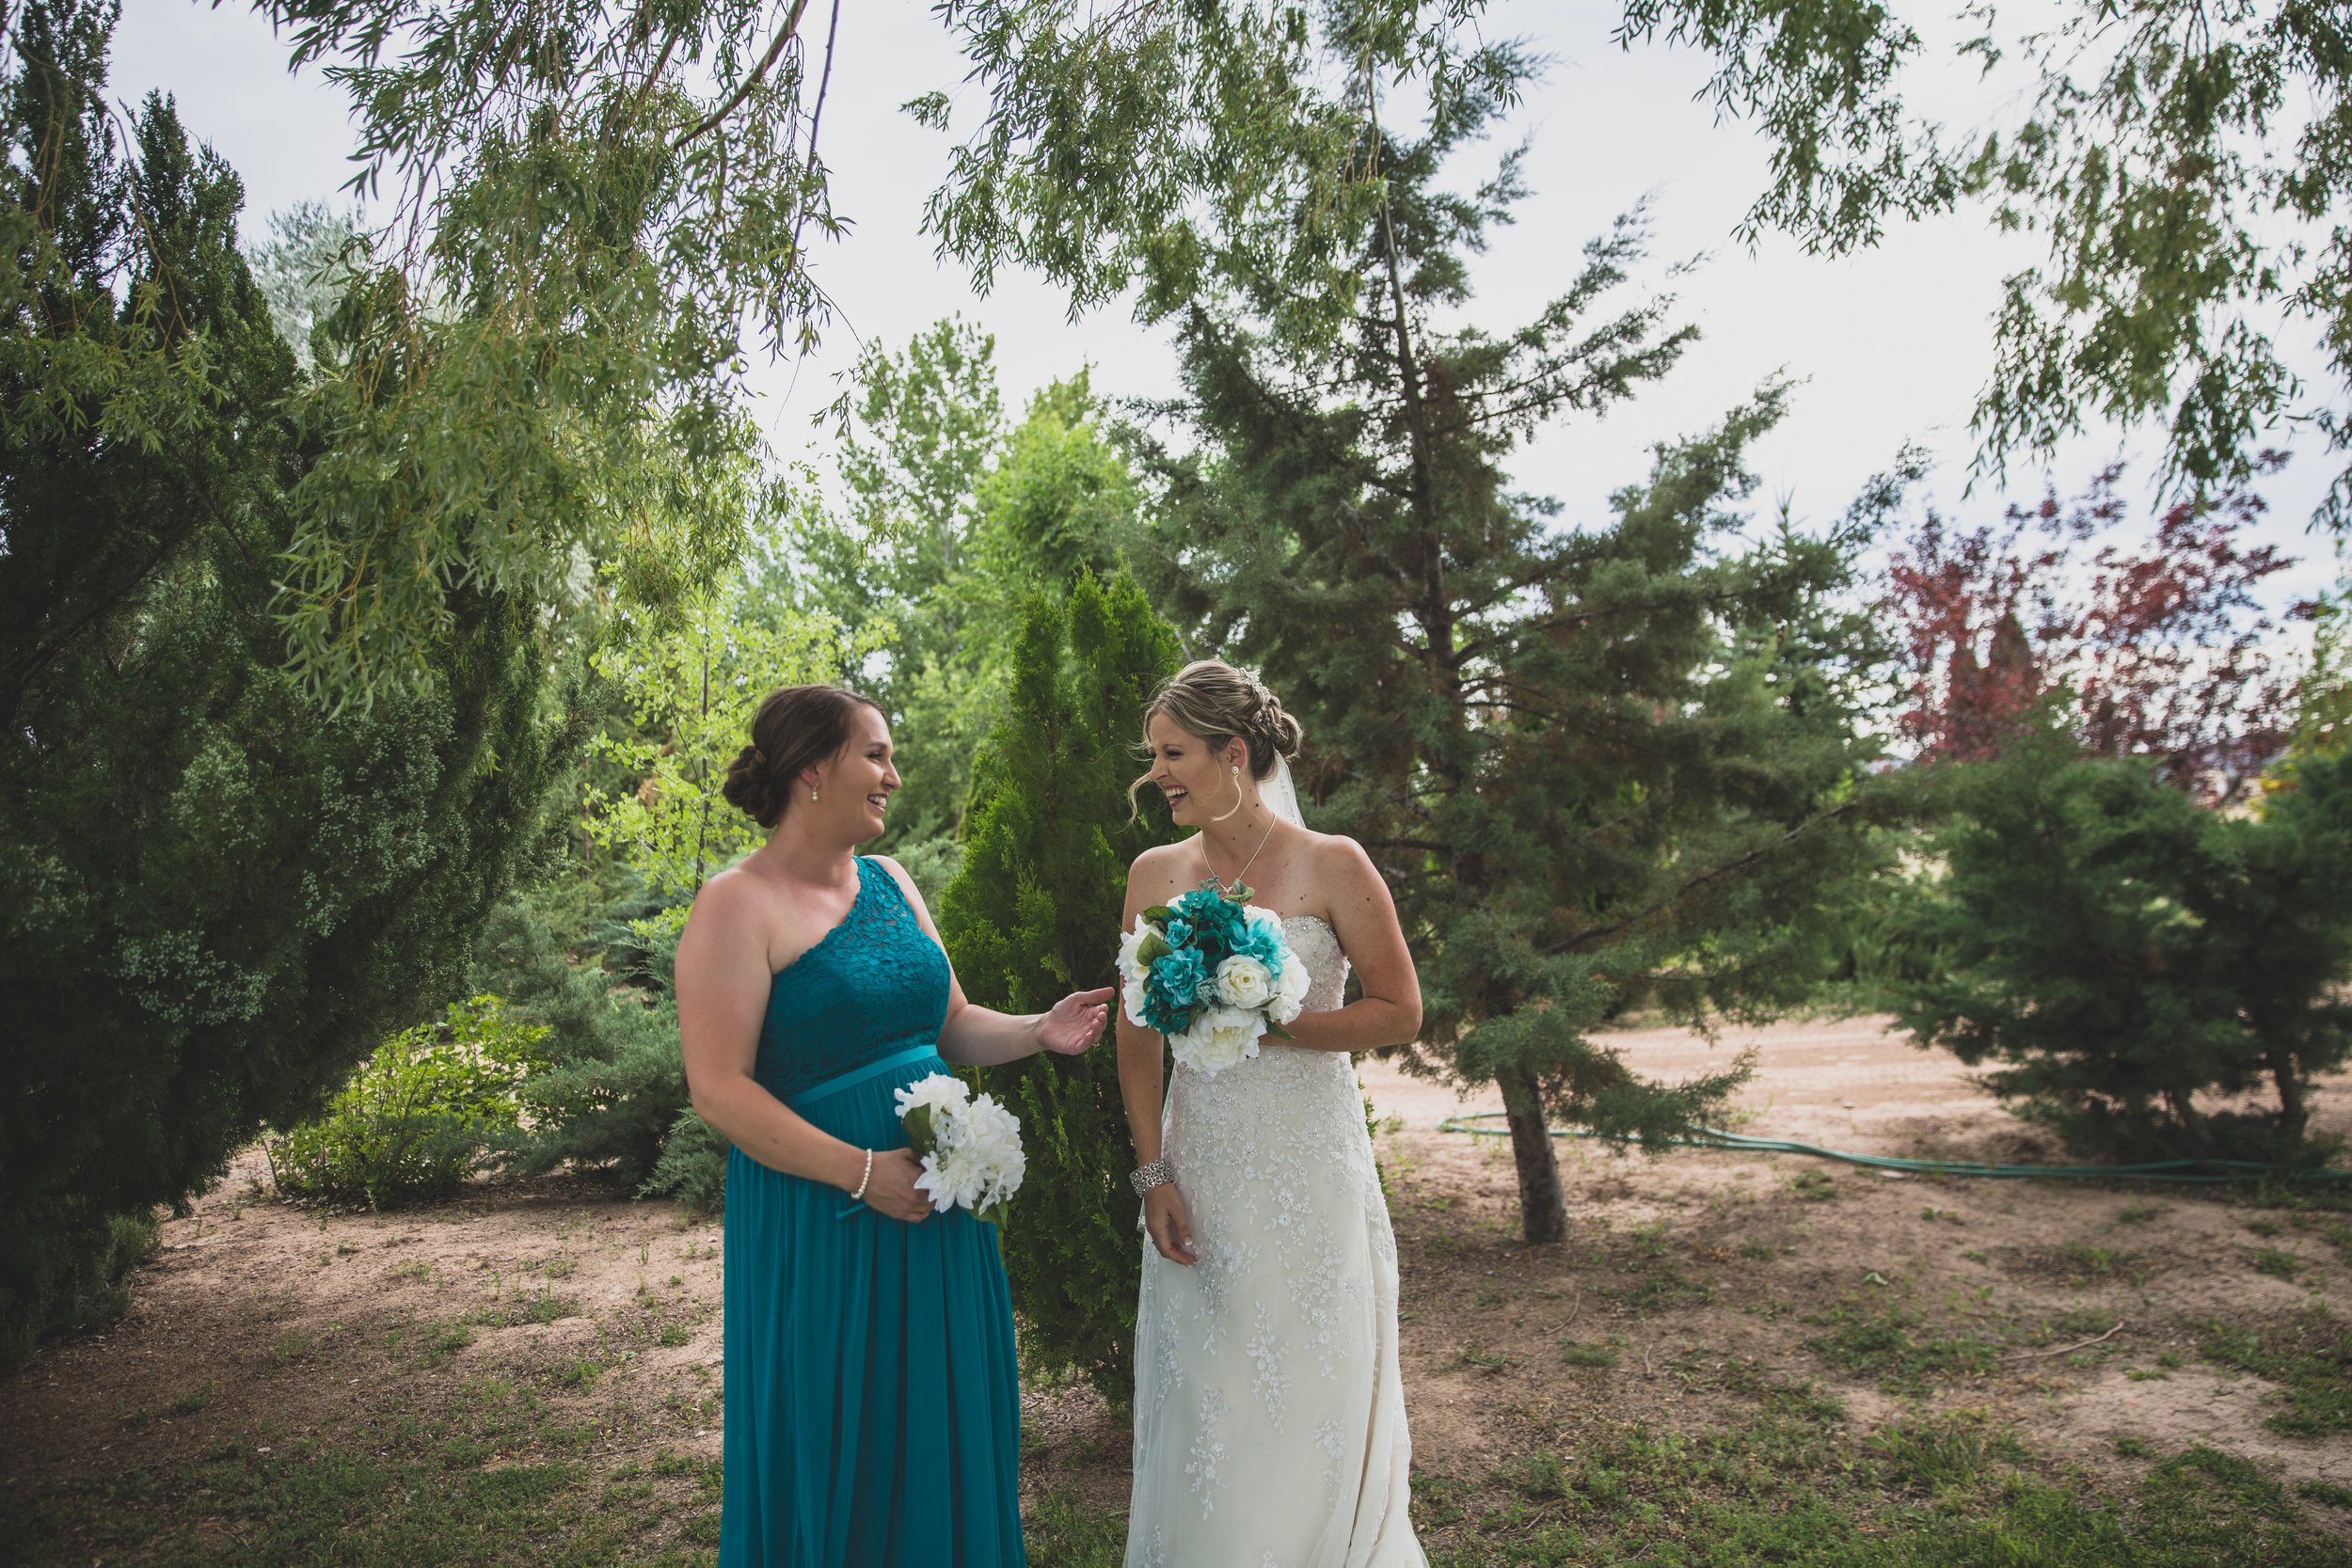  Teal dress at Arizona wedding by Northern Arizona Wedding Photographer, Jennifer Lind Schutsky.  